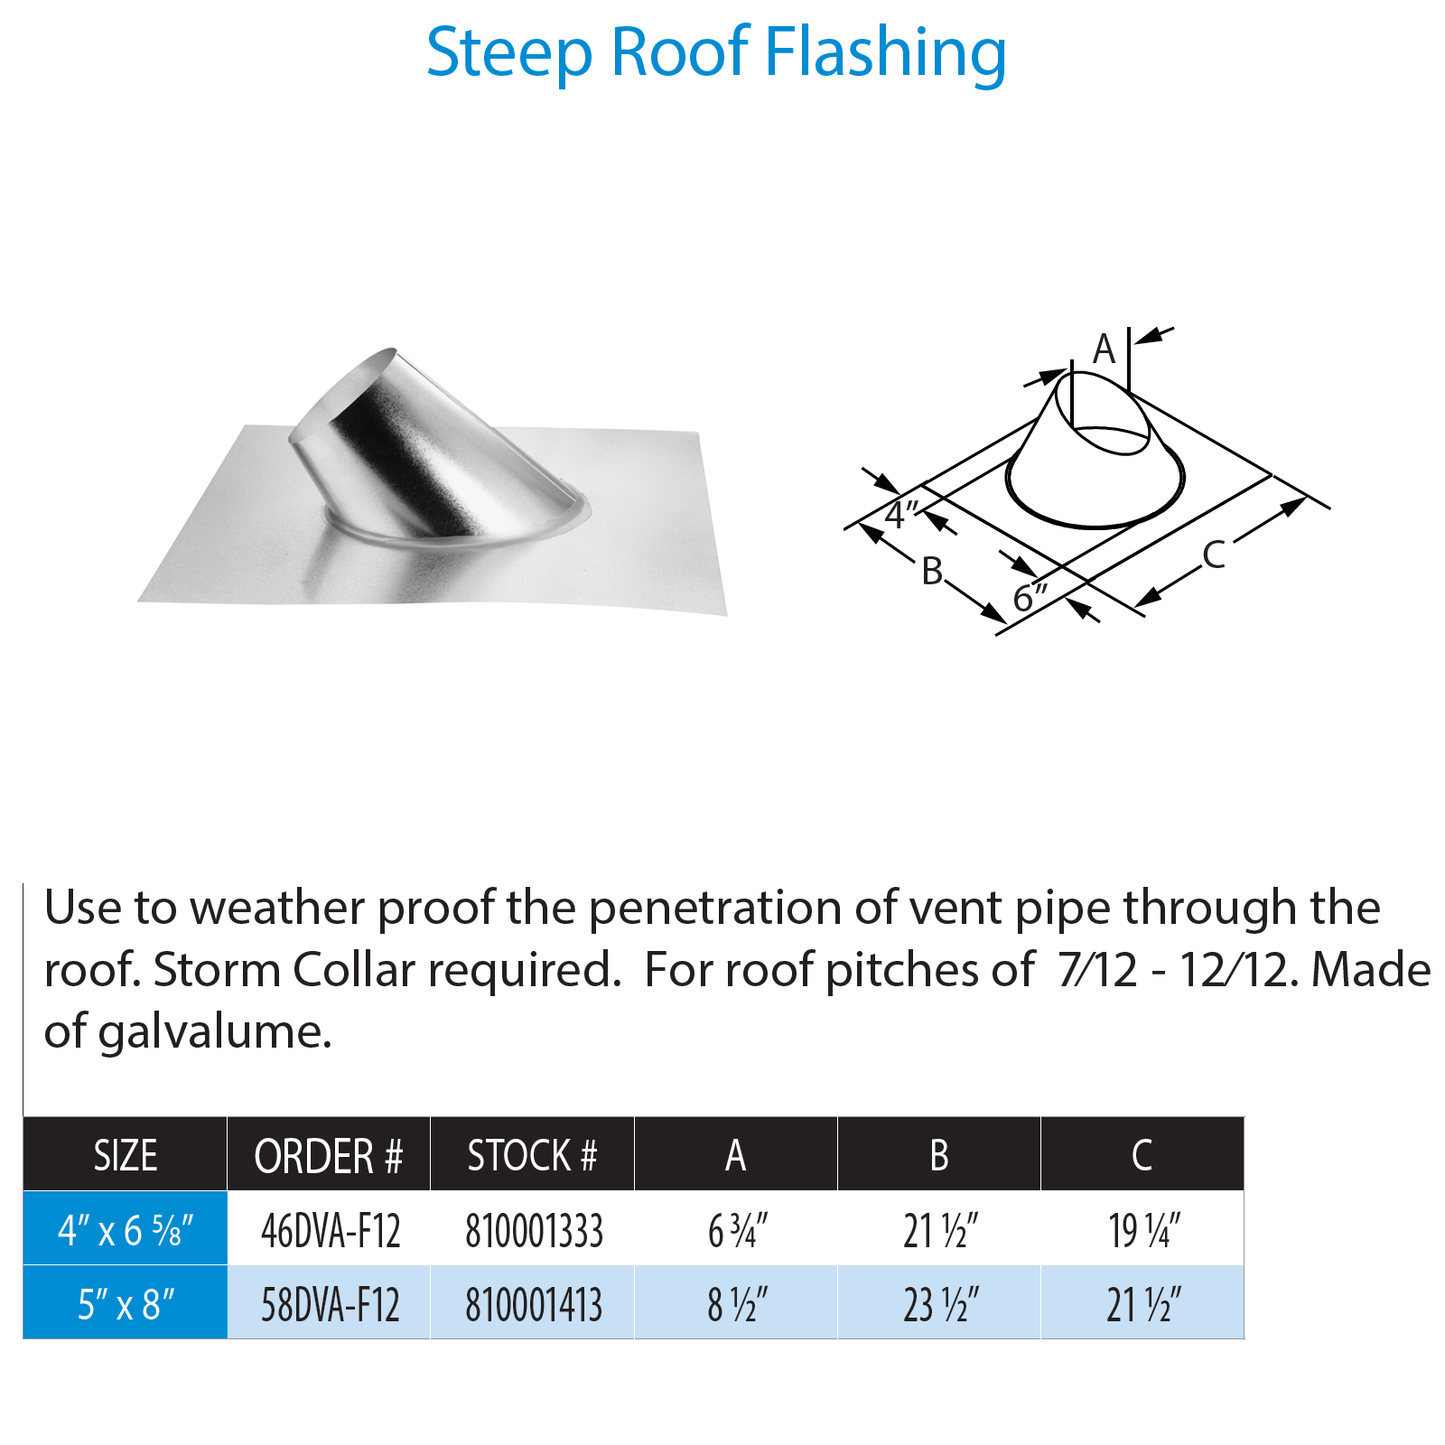 DuraVent DVP Steep Pitch Roof Flashing 7/12-12/12 | 58DVA-F12